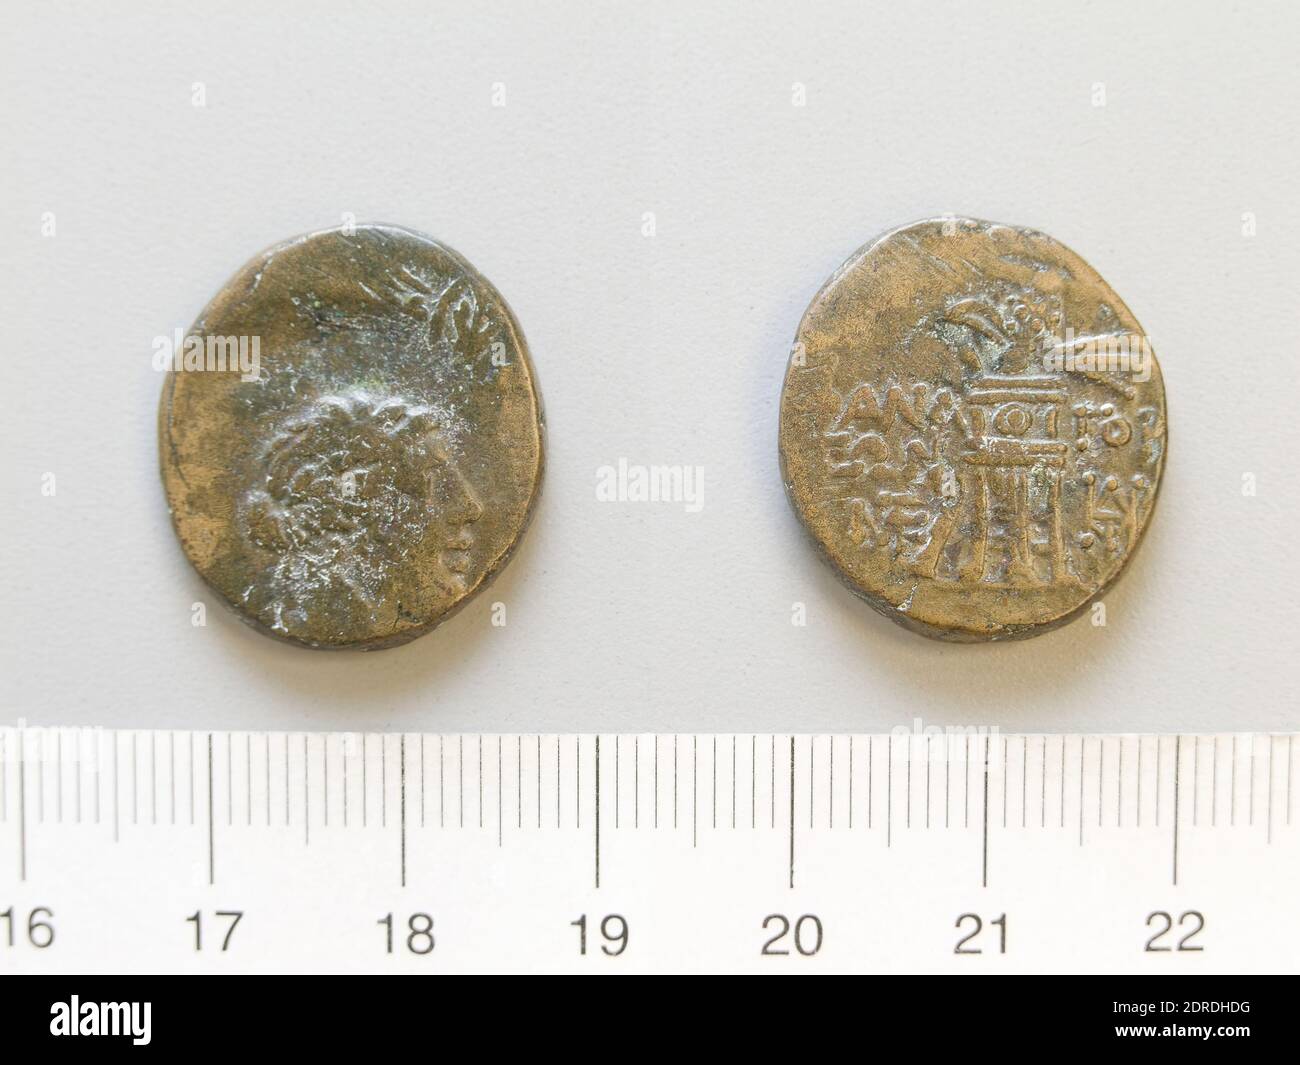 Mint: Phanagoria, Coin from Phanagoria, 1st century B.C., Copper, 8.17 g, 12:00, 23 mm, Made in Phanagoria, Bospori, Greek, 1st century B.C., Numismatics Stock Photo